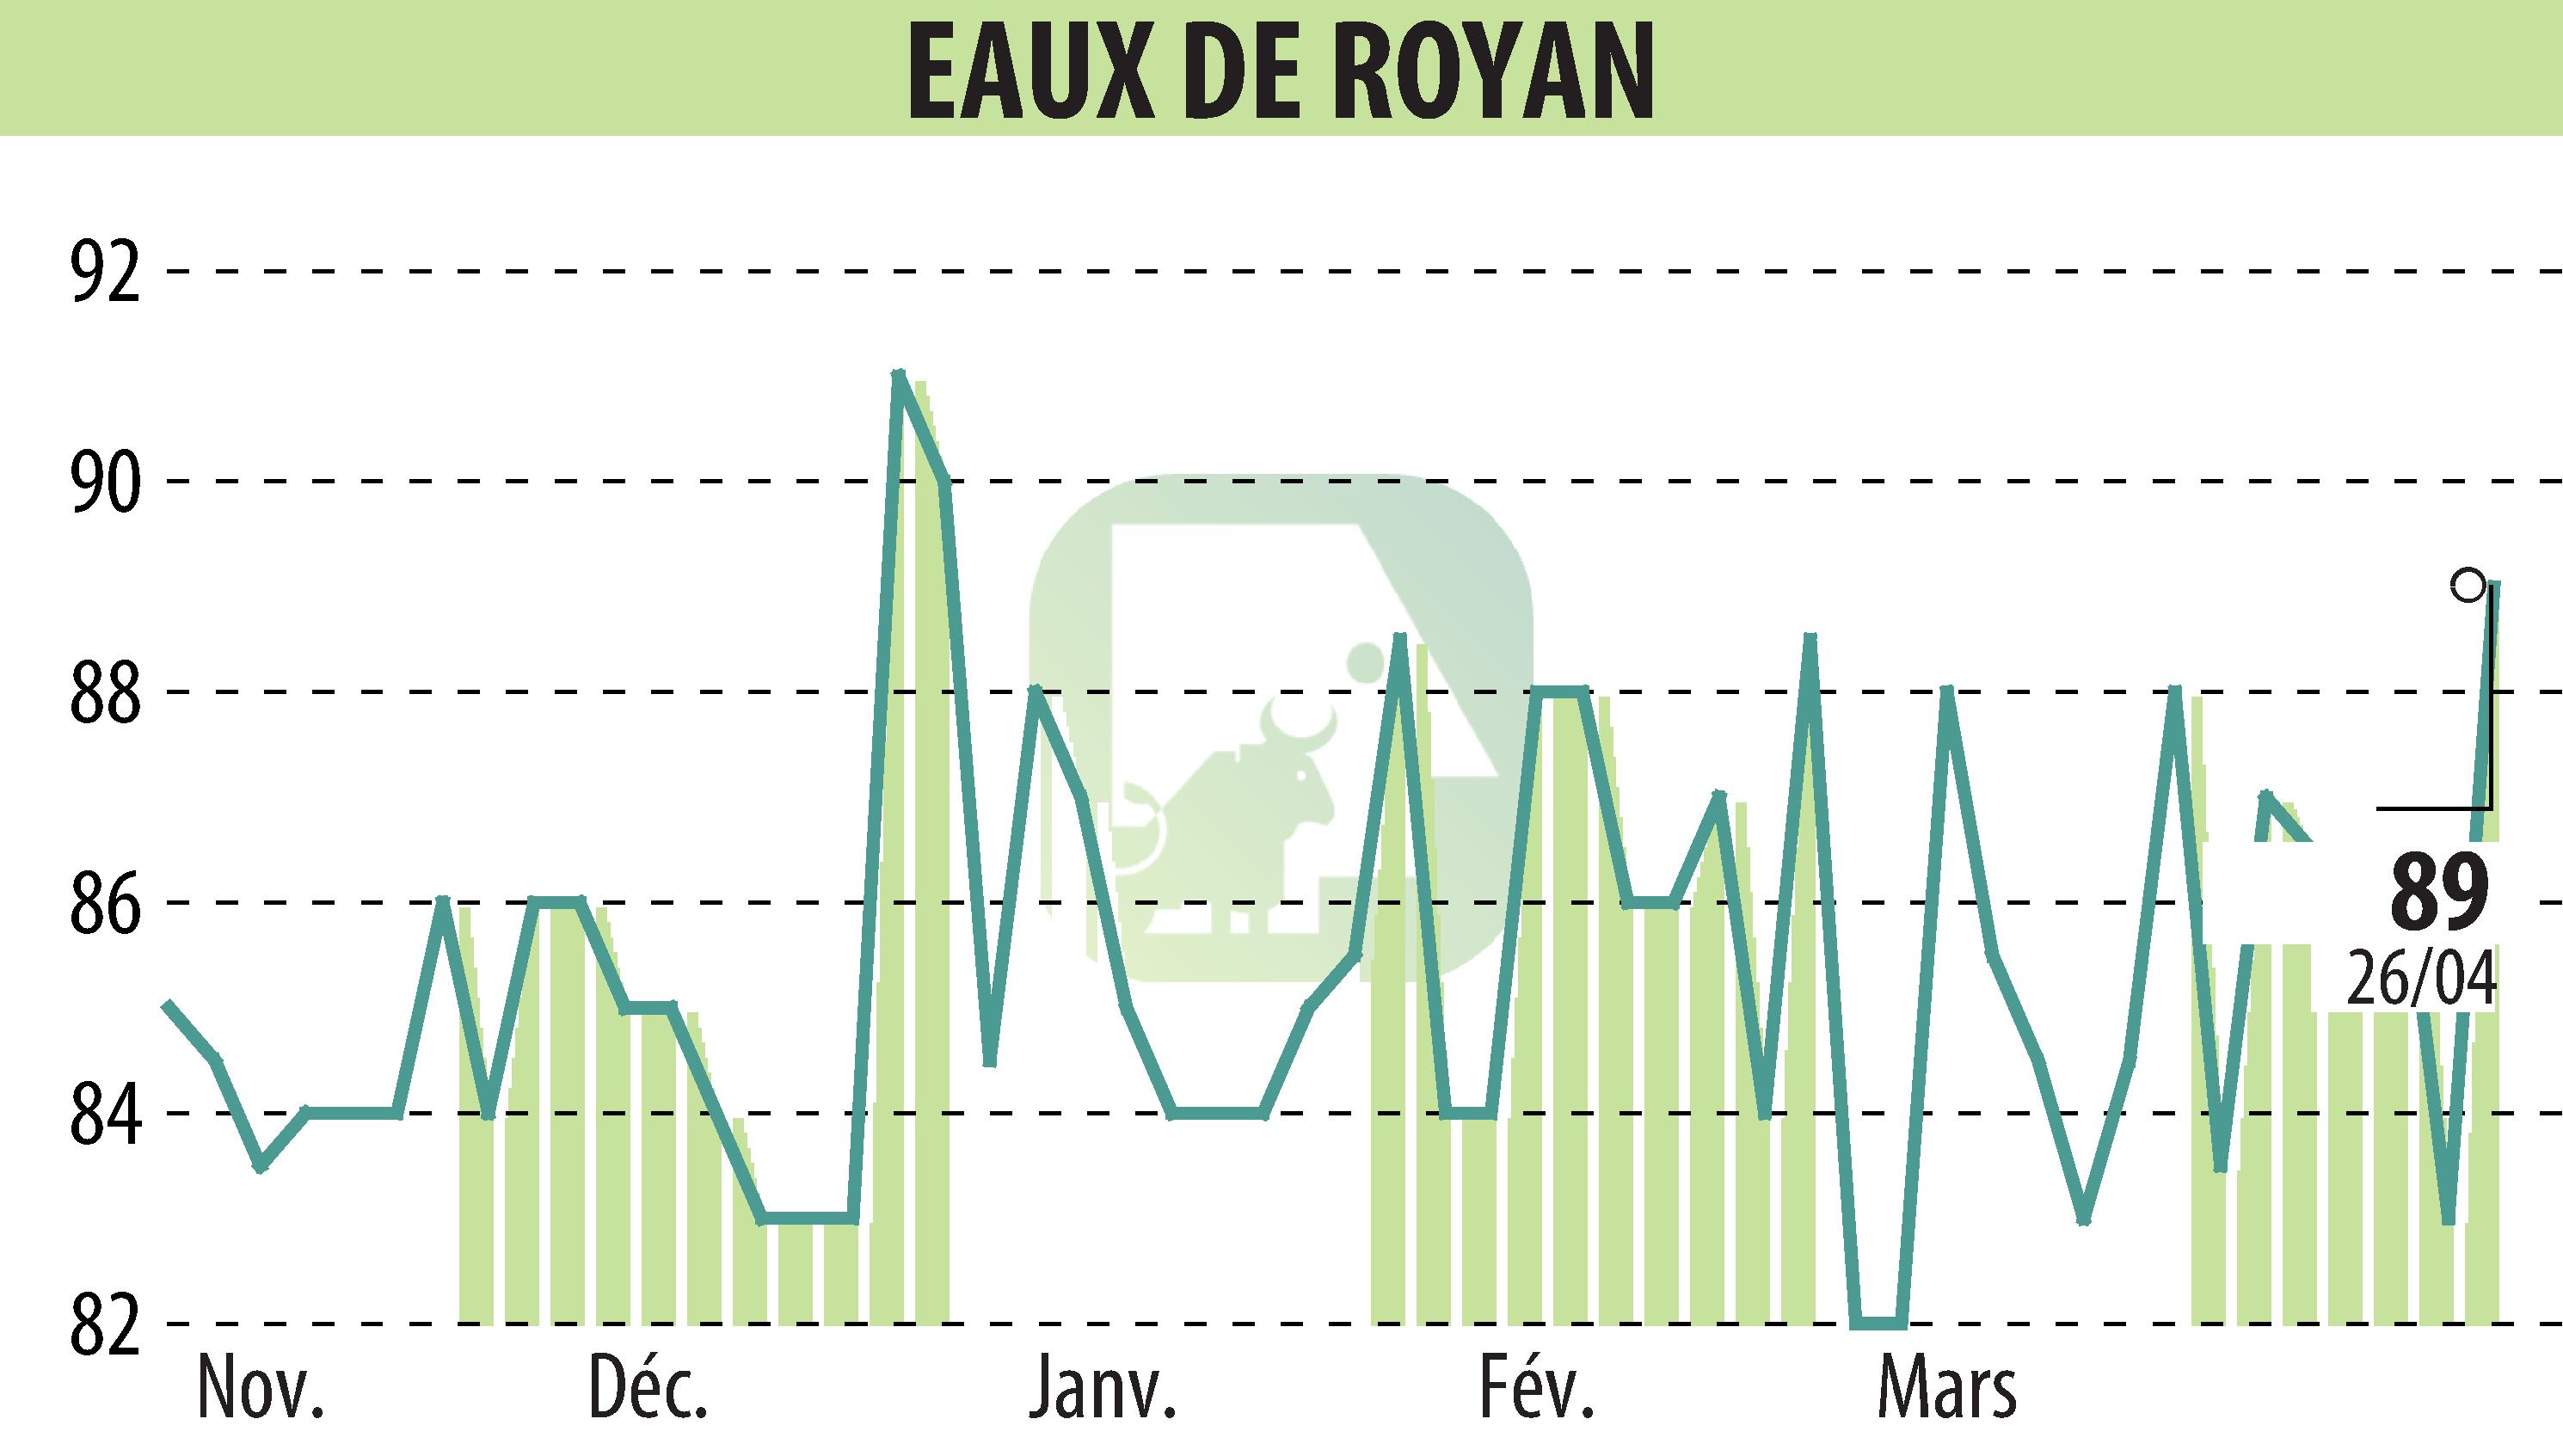 Stock price chart of EAUX DE ROYAN (EPA:MLEDR) showing fluctuations.